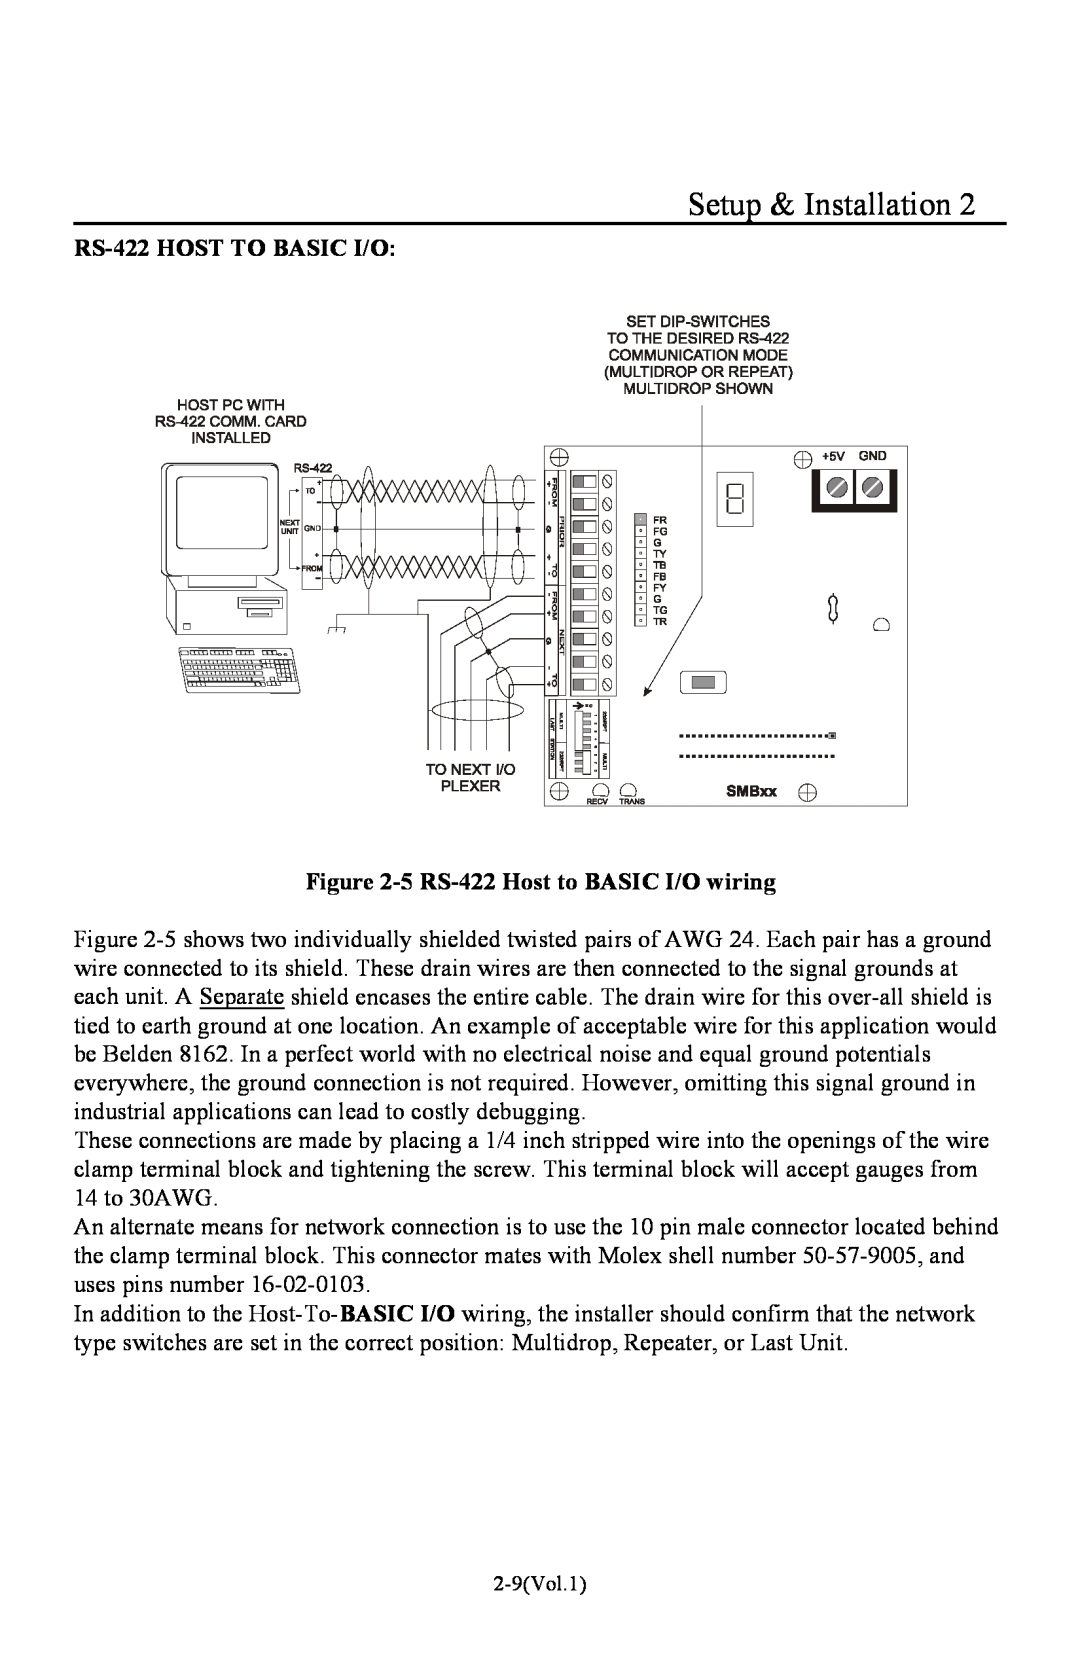 I-O Display Systems Basic I/O Product Setup & Installation, RS-422 HOST TO BASIC I/O -5 RS-422 Host to BASIC I/O wiring 